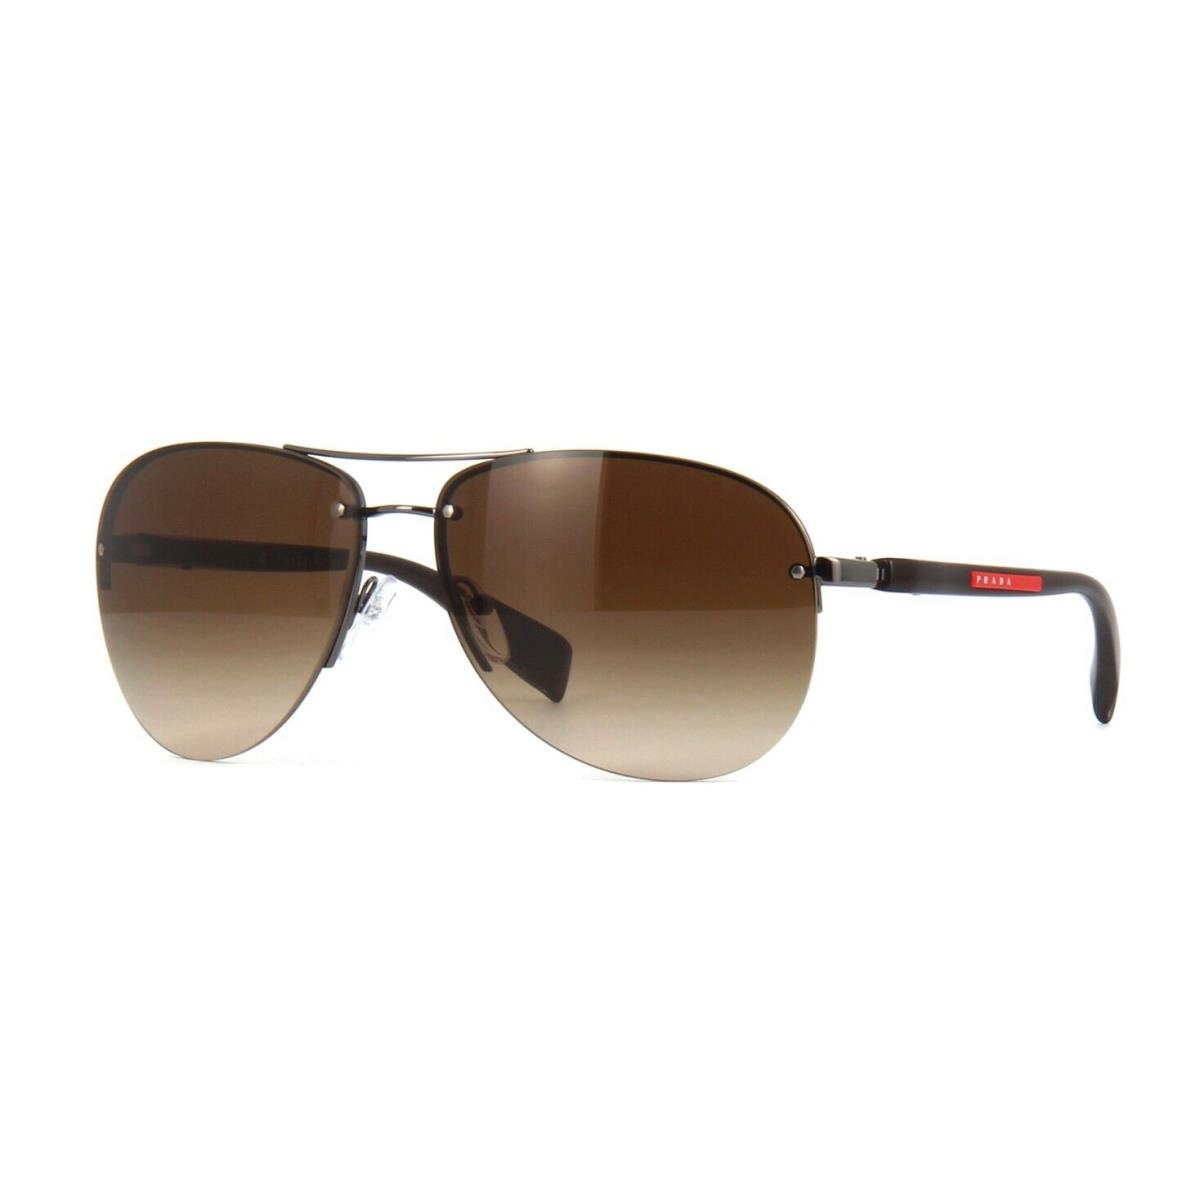 Prada Linea Rossa Sport Sps 56MS Ruthenium Dark Brown/brown Shaded Sunglasses - Frame: Ruthenium Dark Brown, Lens: Brown Shaded